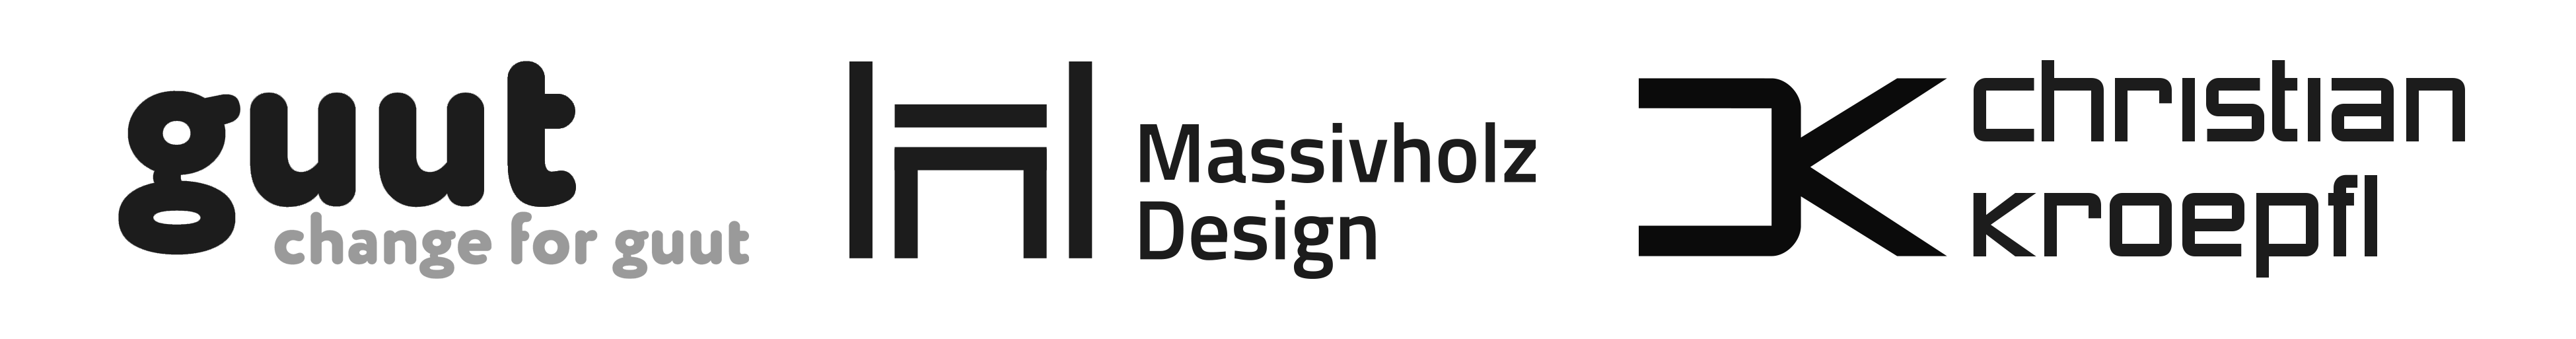 Guut | Massivholz-Design | Christian Kroepfl